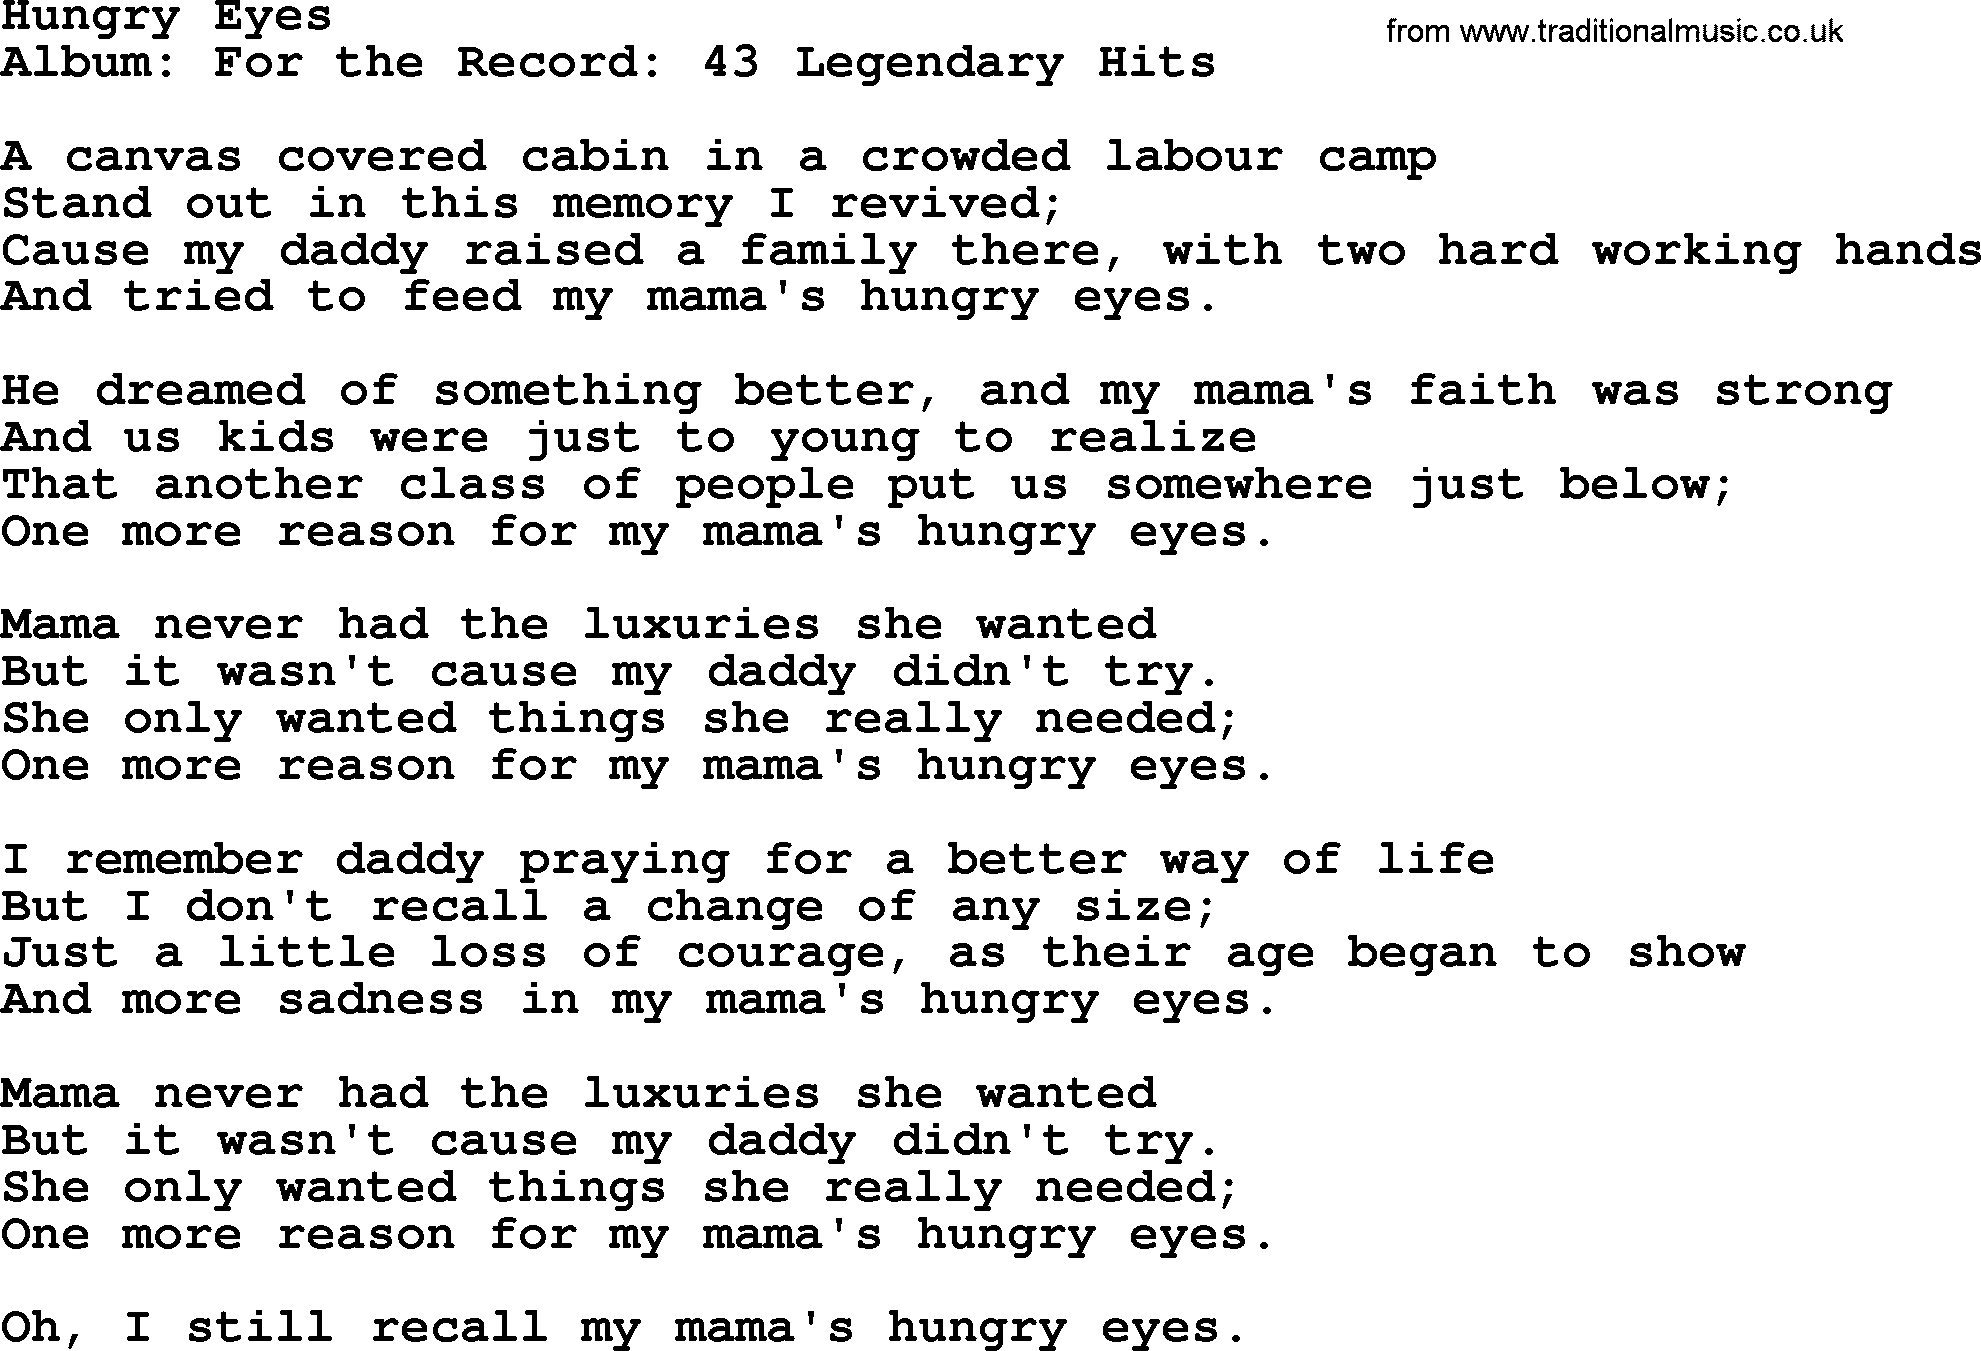 Merle Haggard song: Hungry Eyes, lyrics.